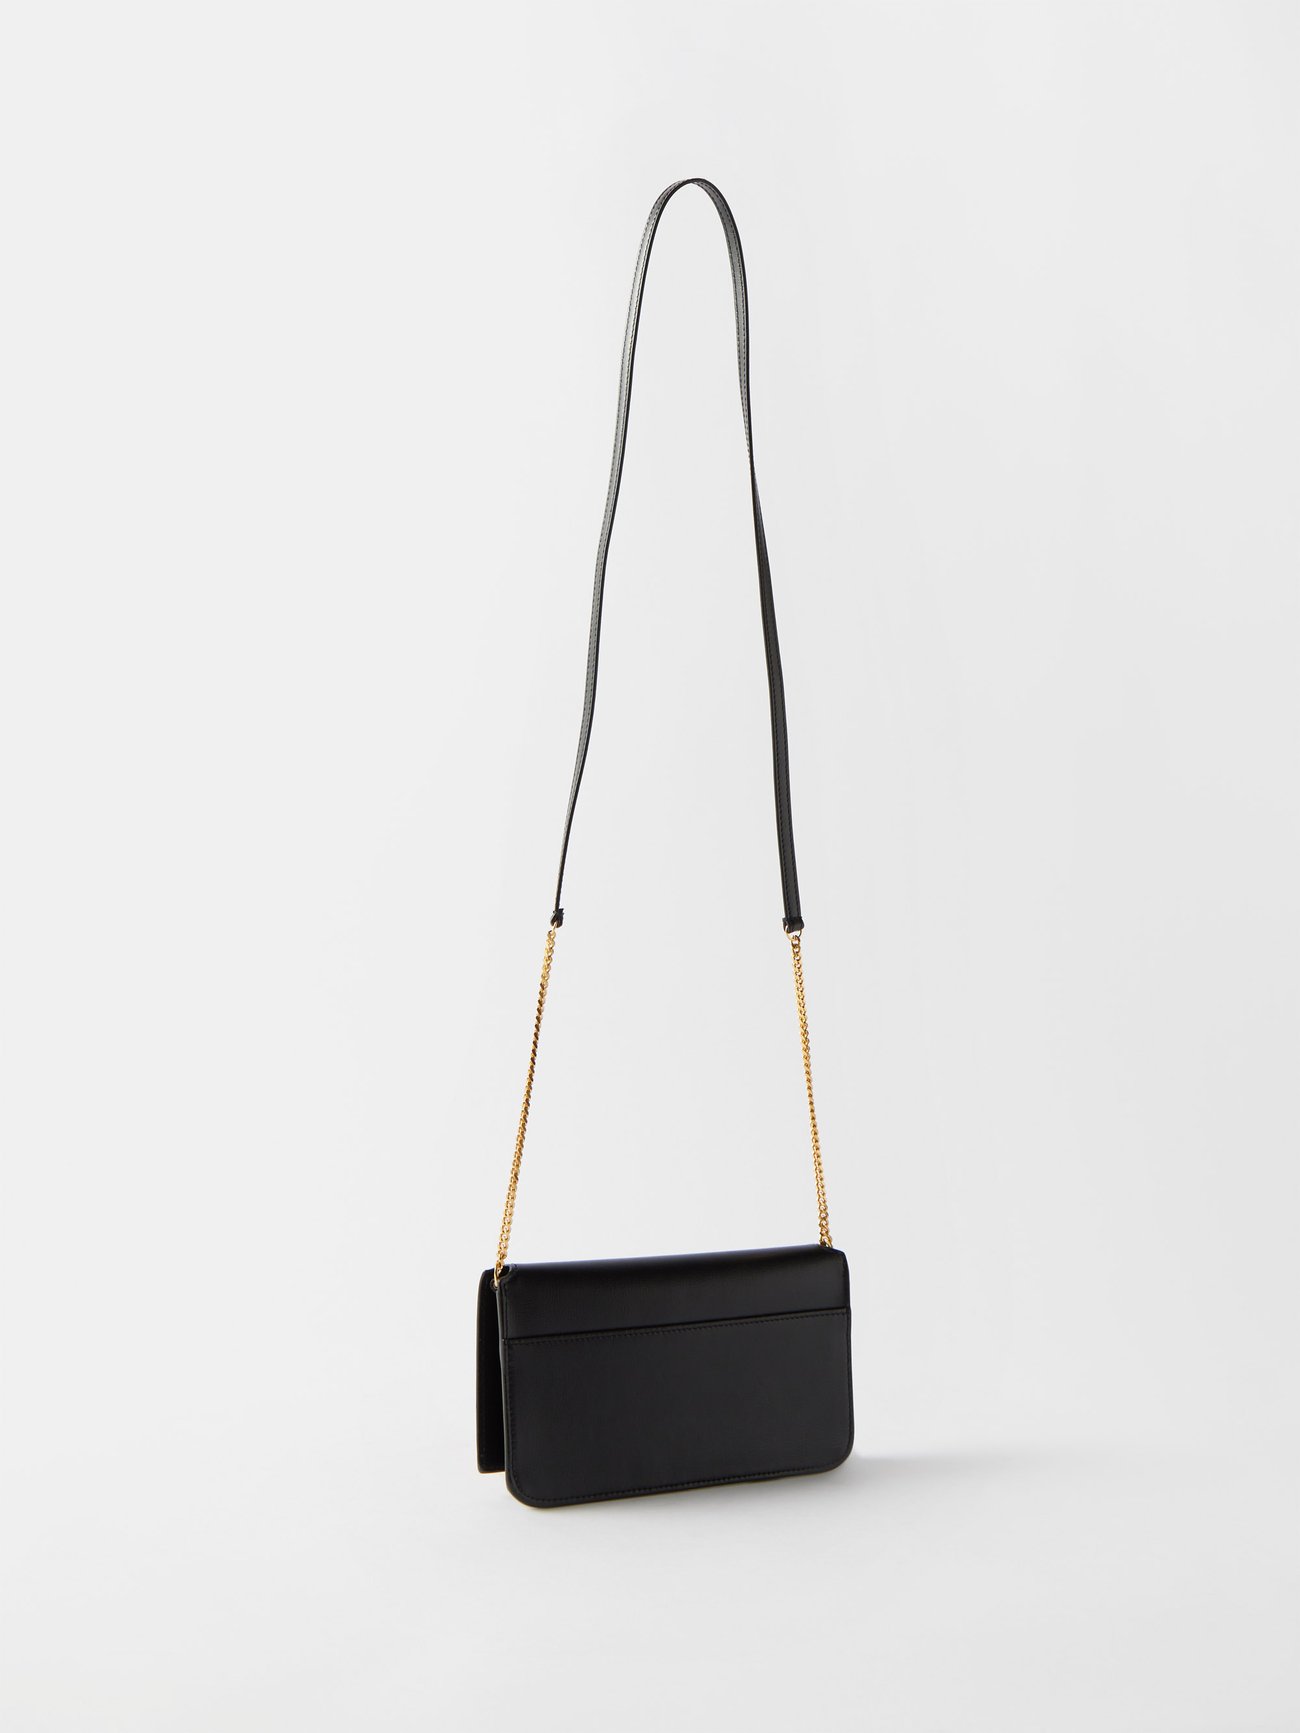 HealthdesignShops, Saint Laurent leather phone bag